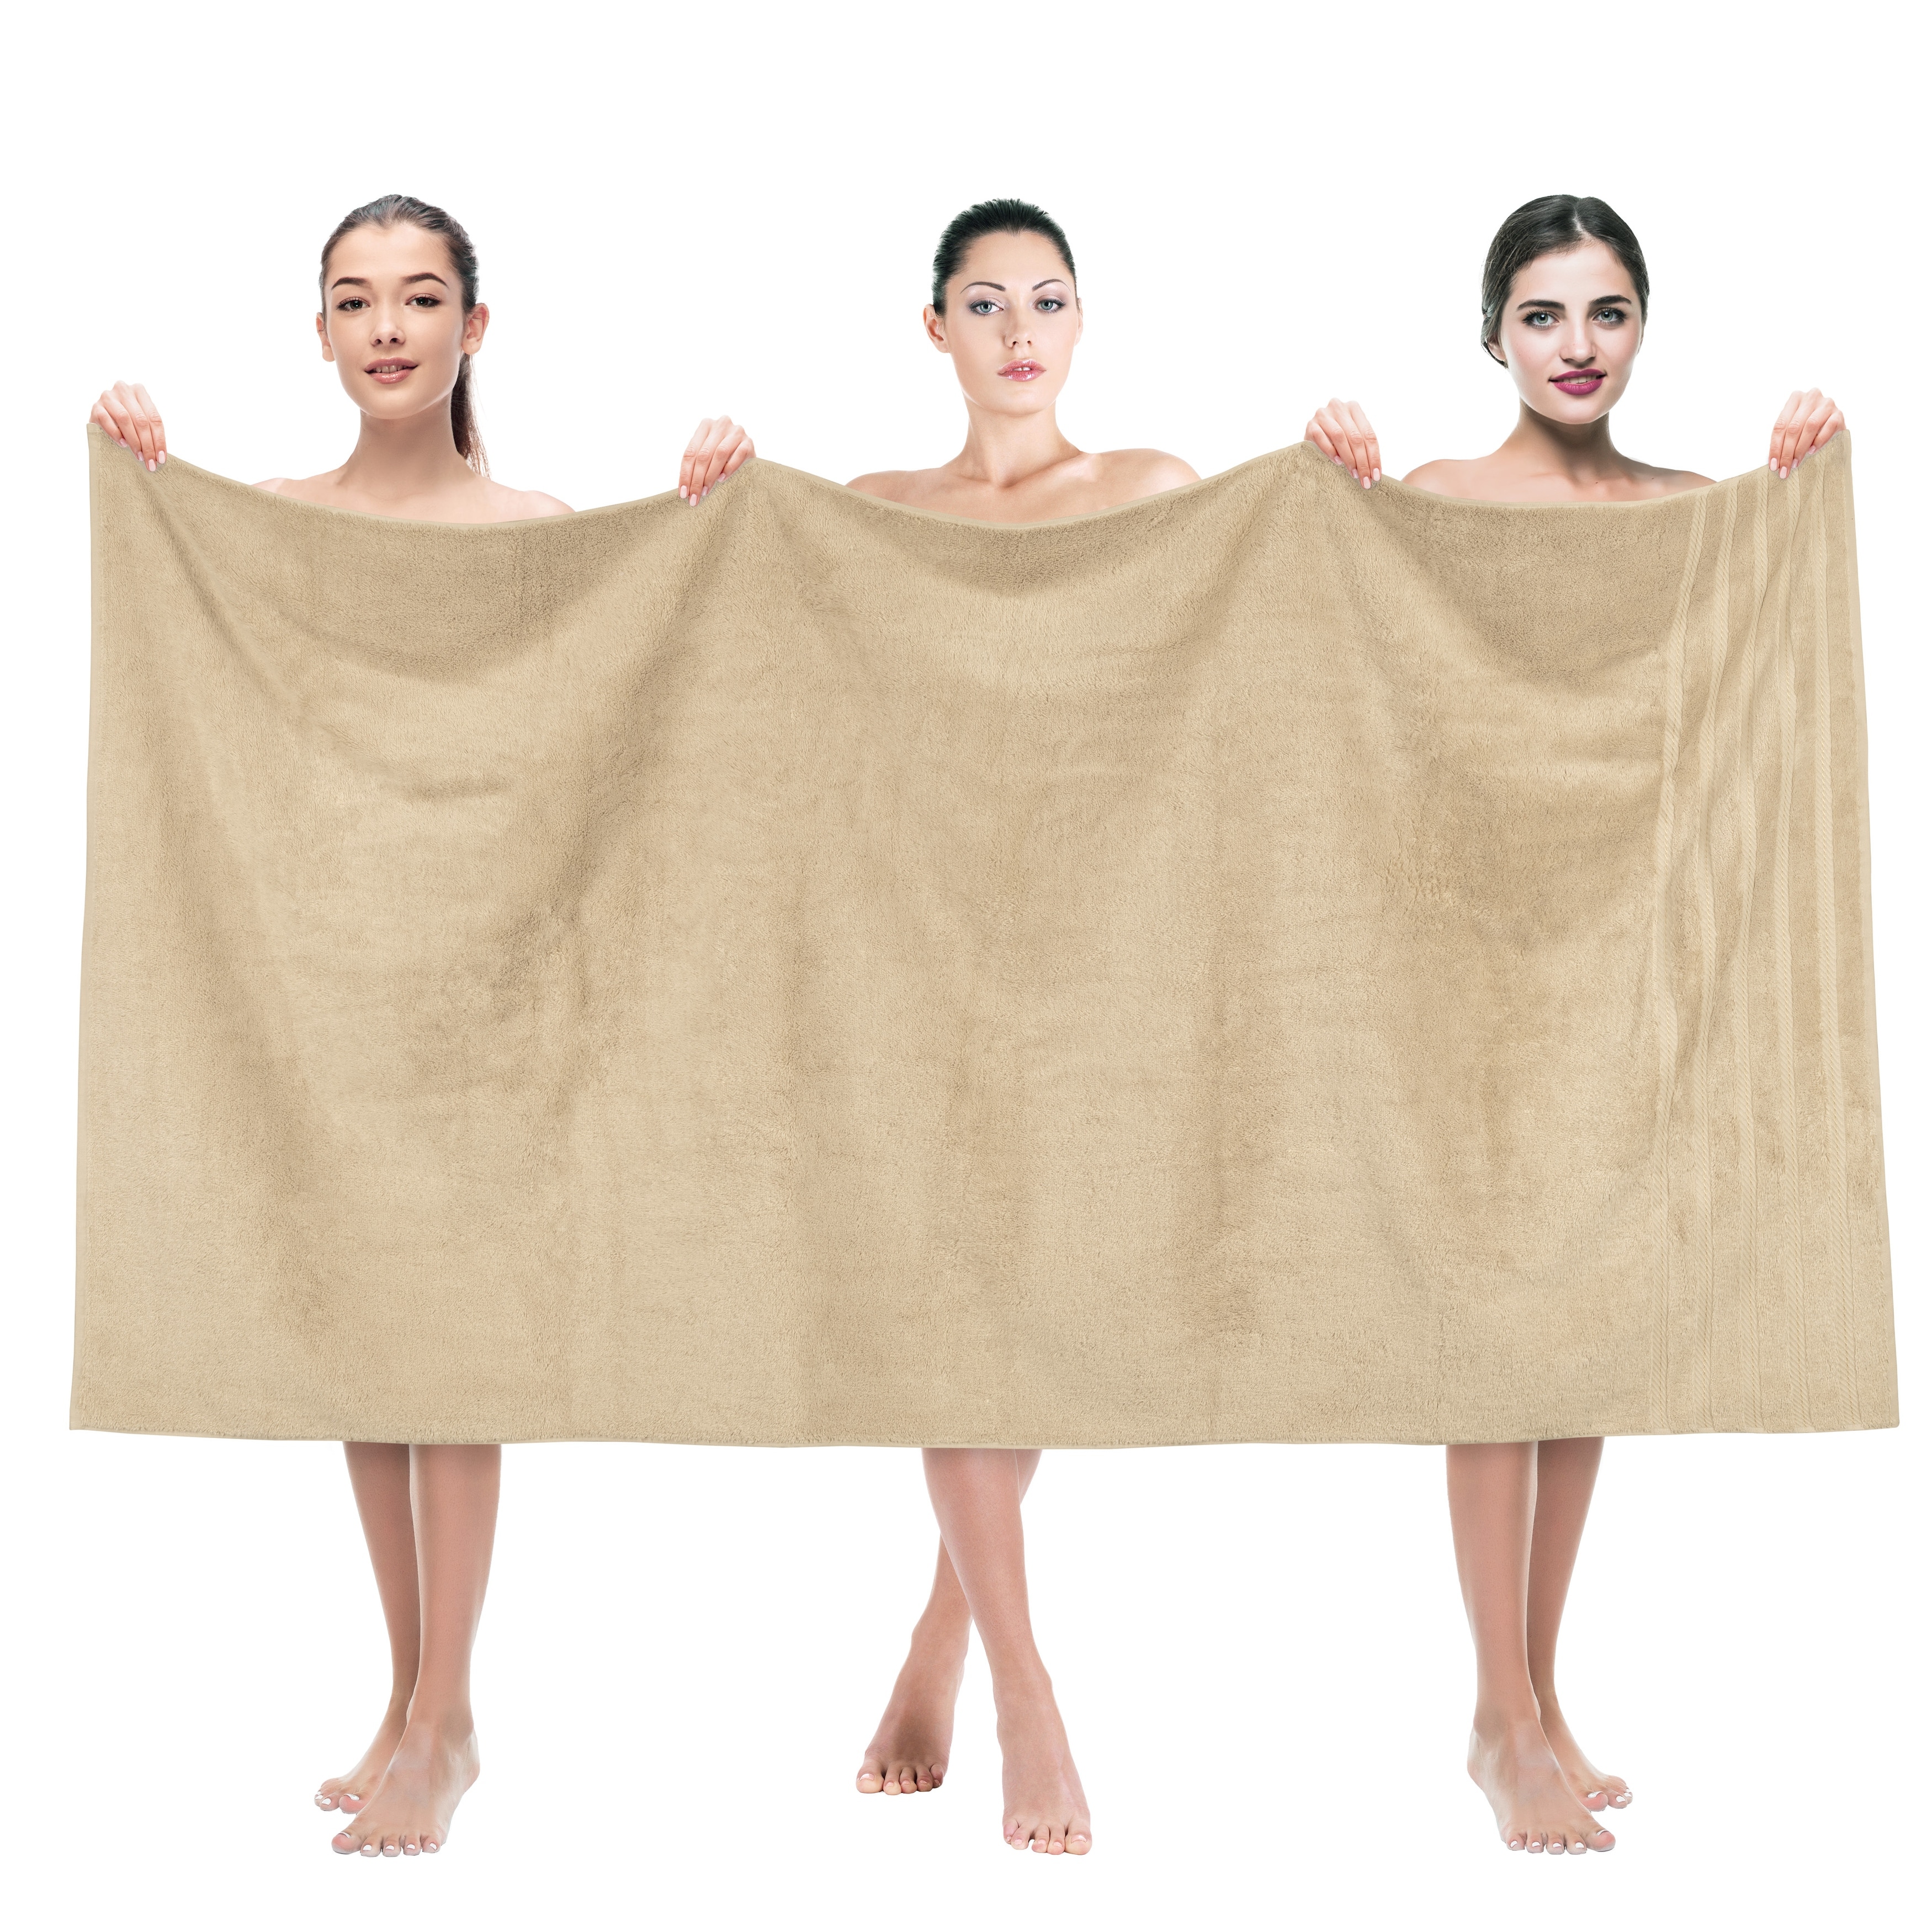 American Soft Linen Oversized Bath Sheet 40x80, Jumbo Large Bath Towels for